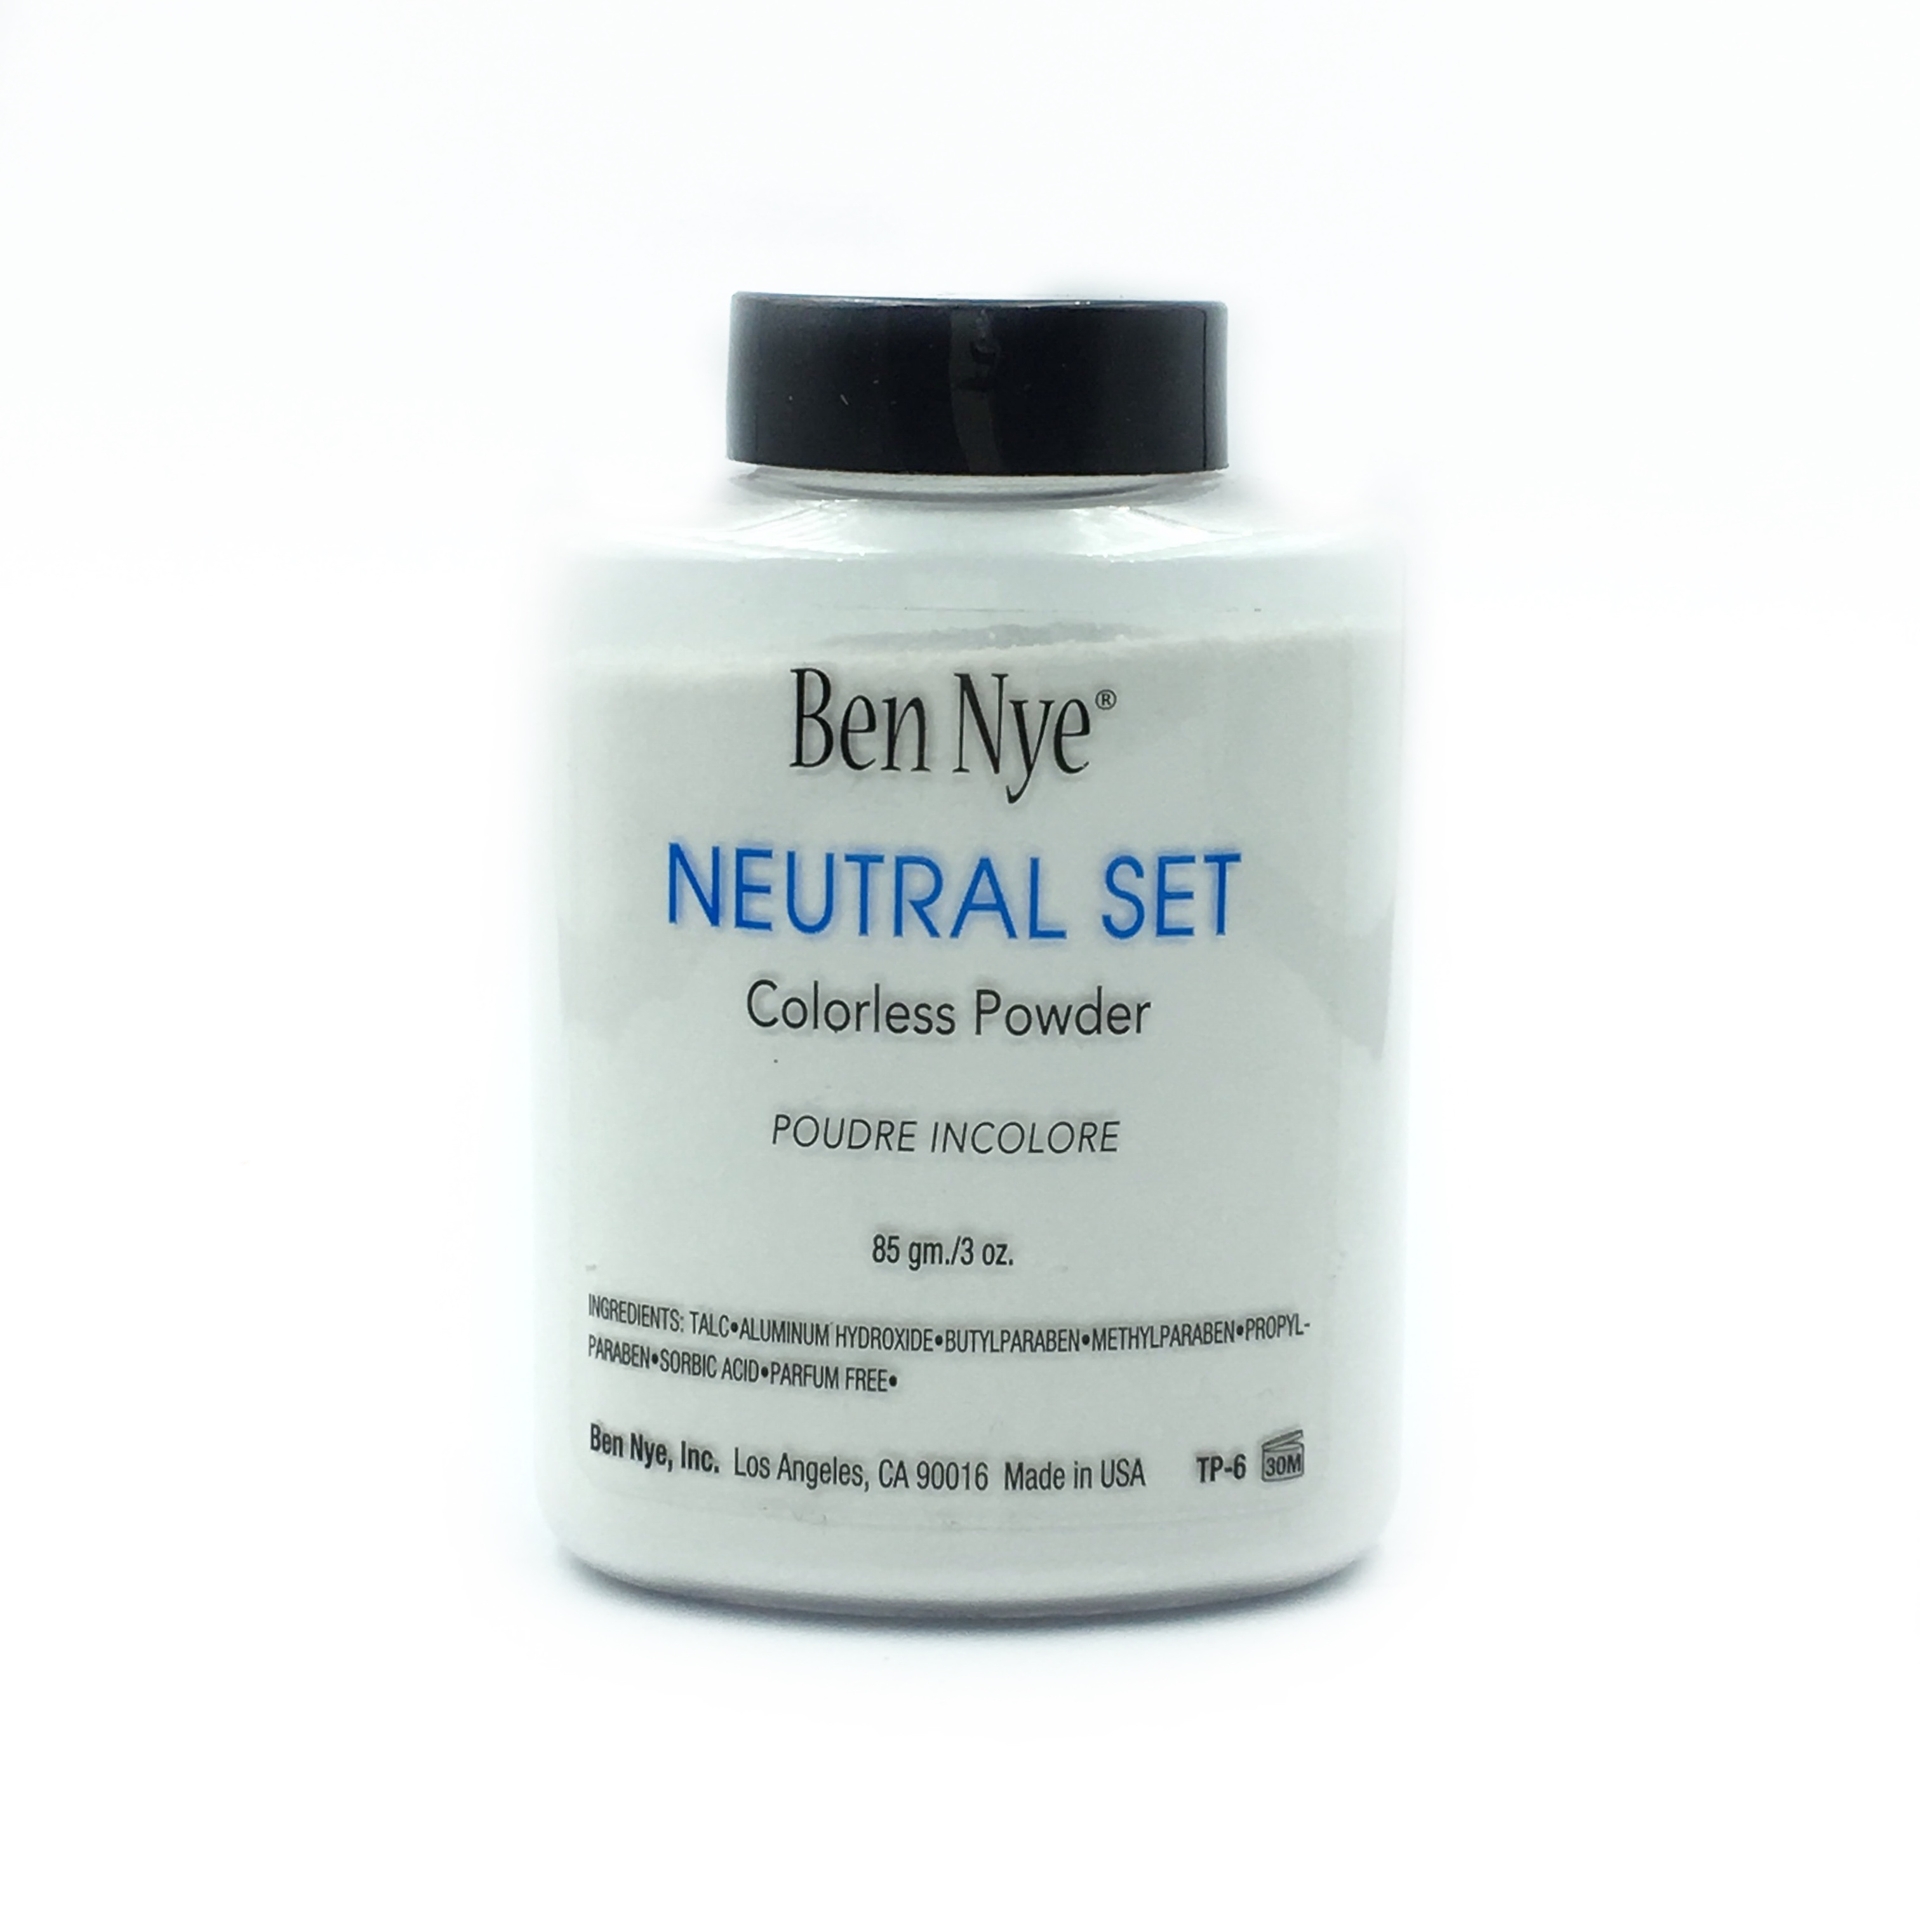 Ben Nye Neutral Set Colorless Powder Faces